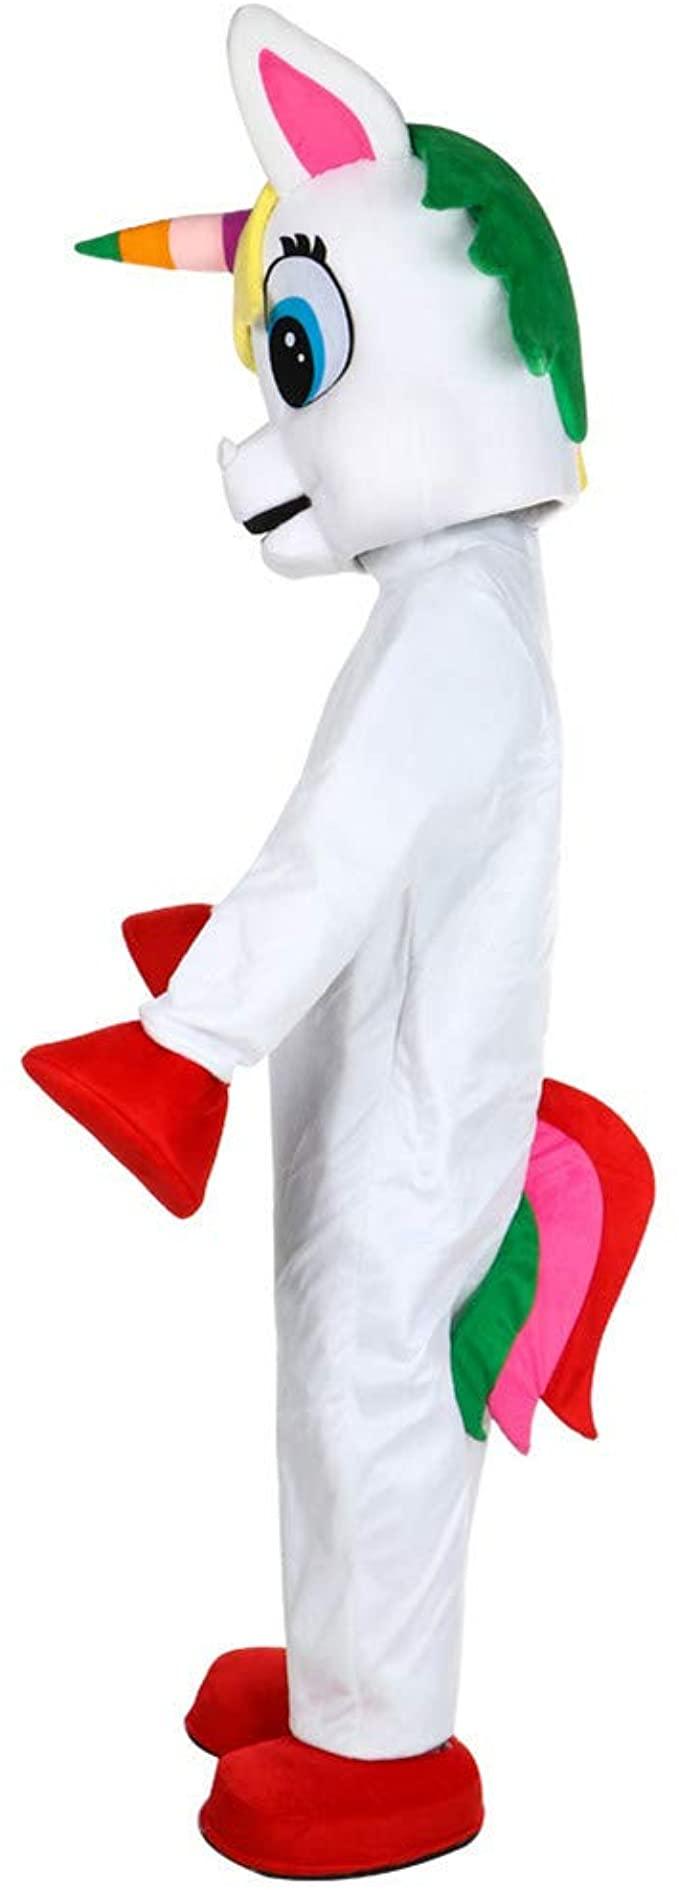 Unicorn costume for adults - Unicorn